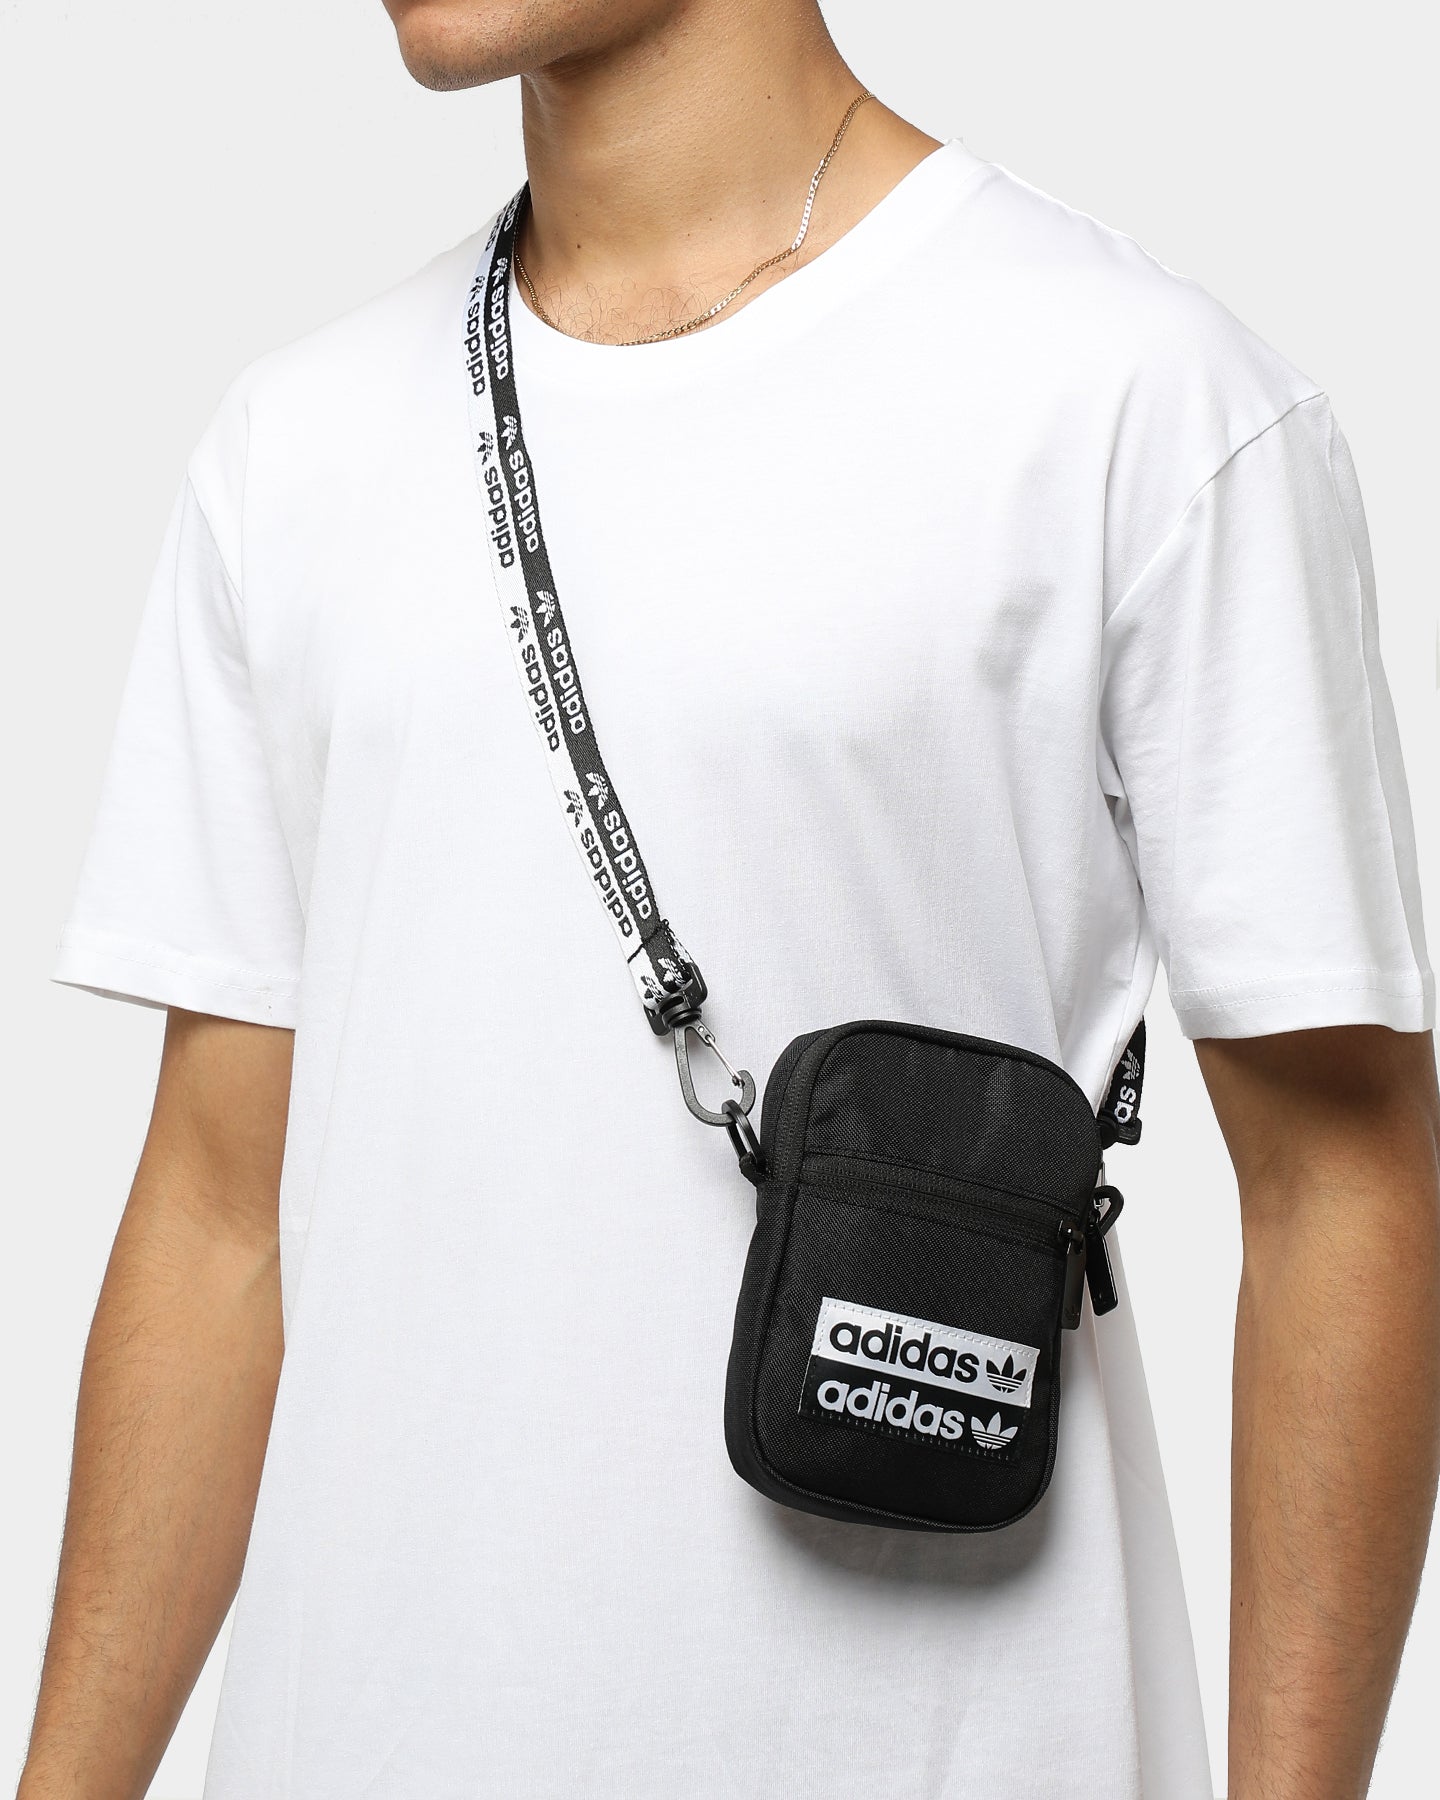 Adidas Vocal Fest Bag Black/White 